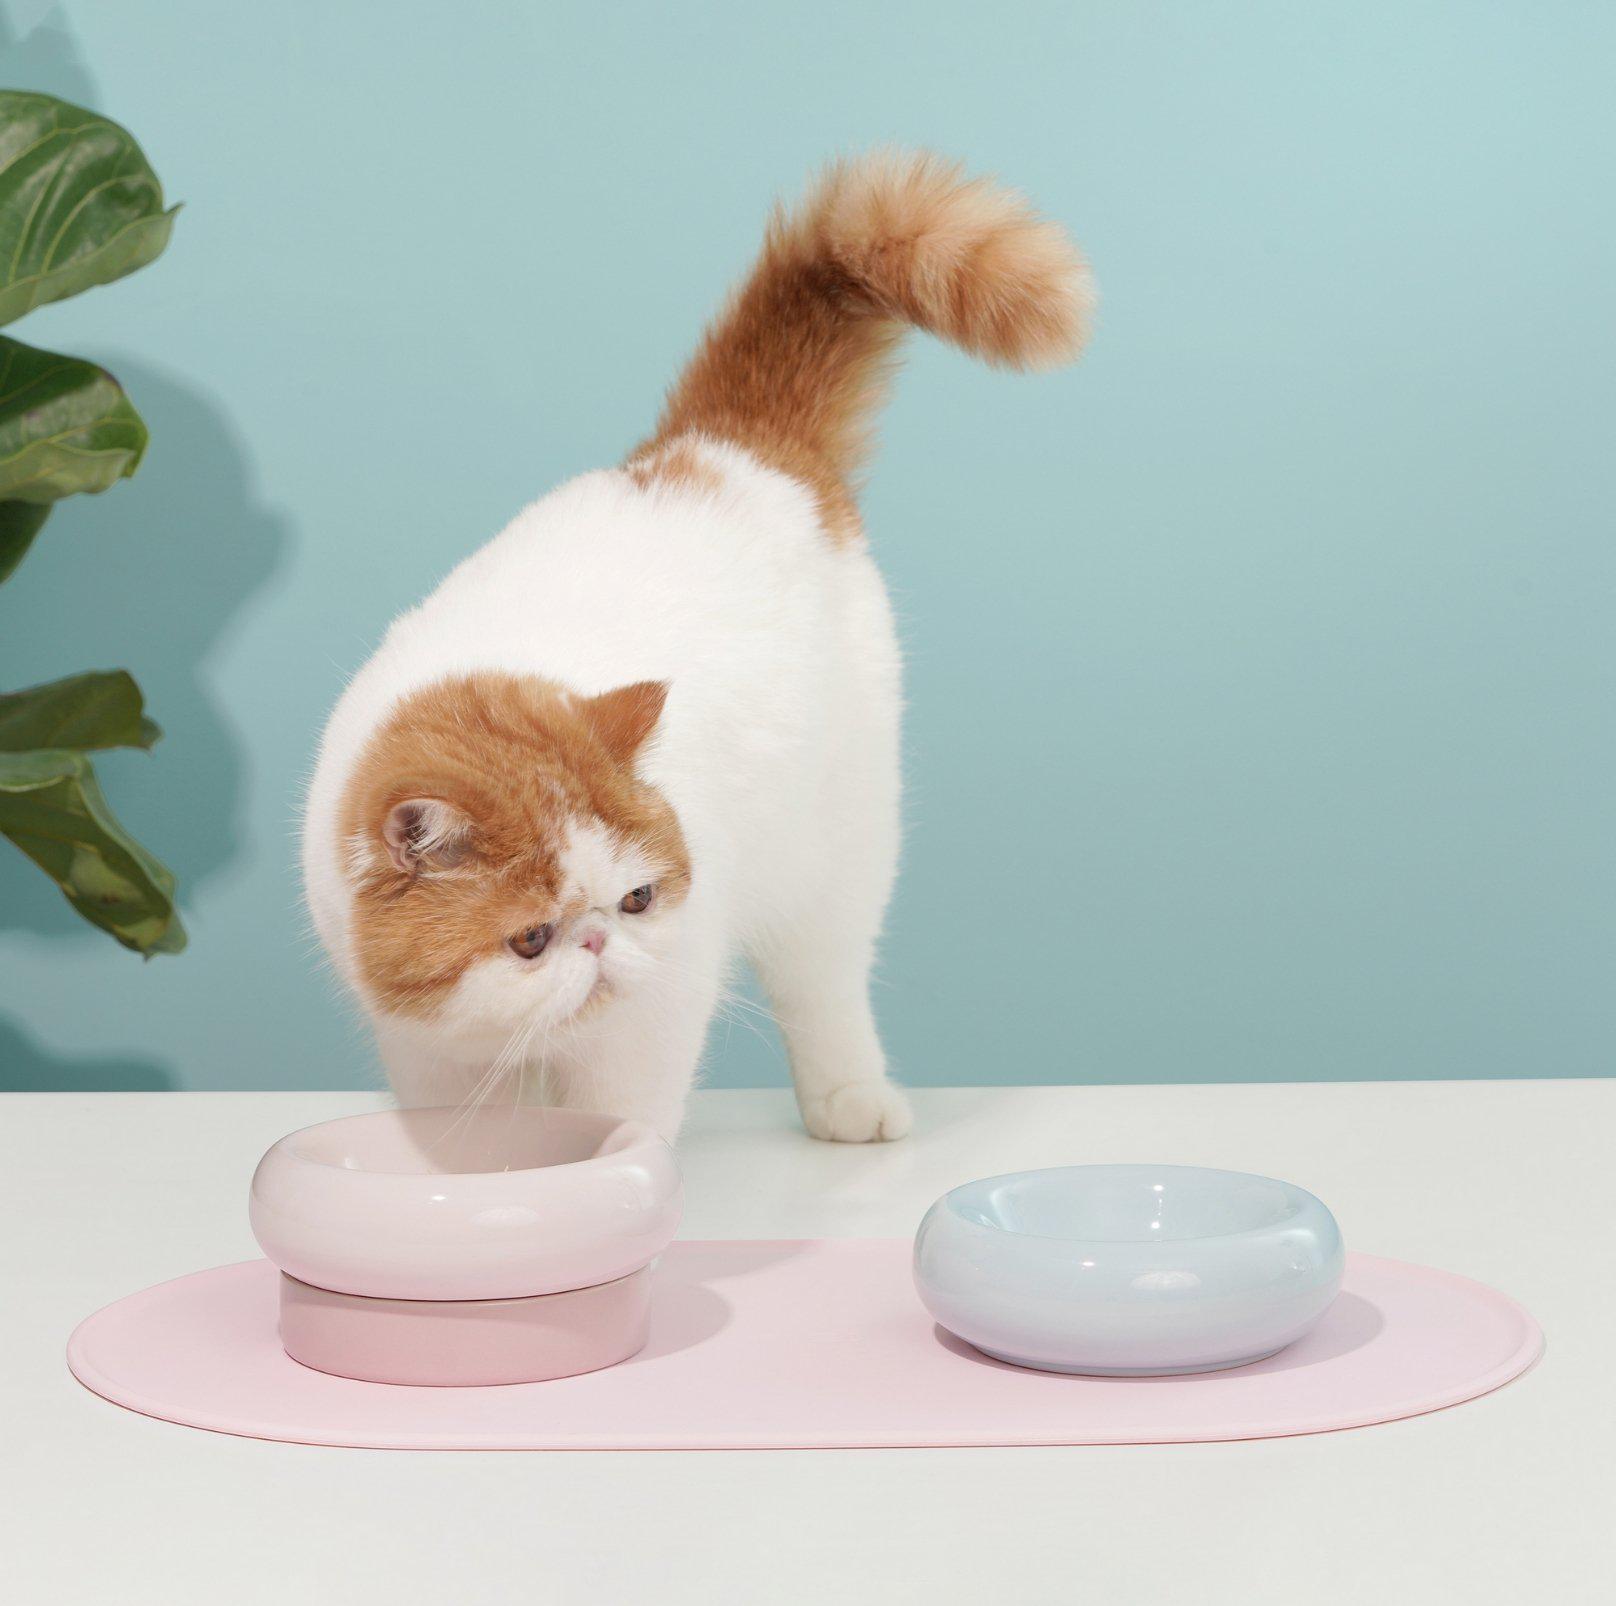 Makesure Dual-Layer Ceramic Pet Bowls Cat and Small Dog Bowls